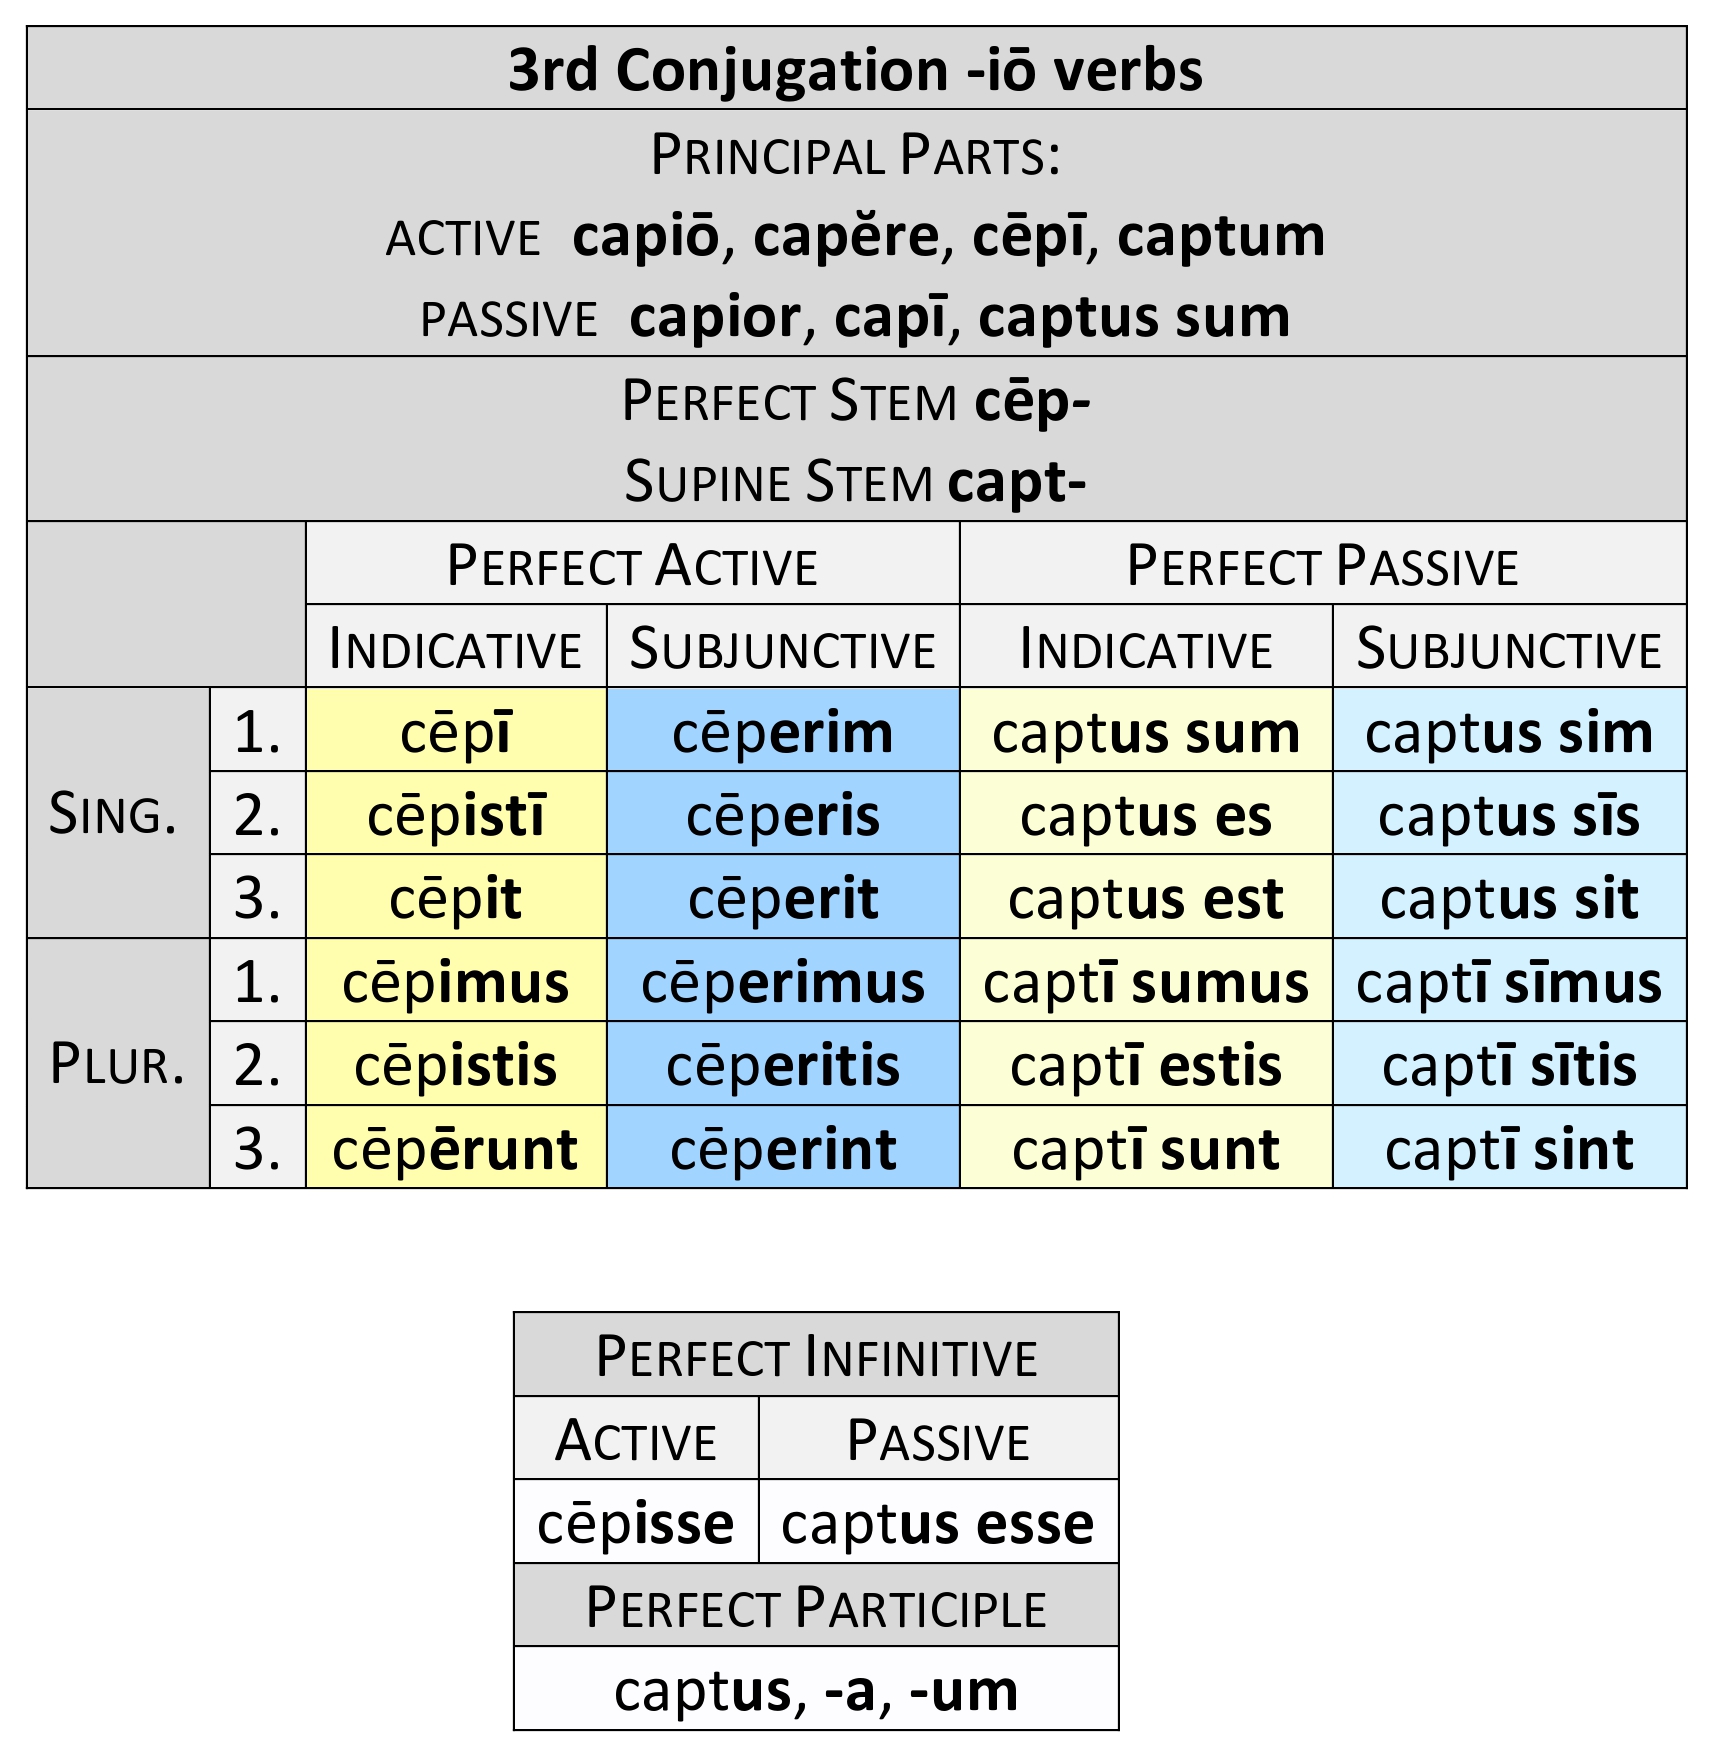 3rd Conjugation in -iō Perfect paradigm